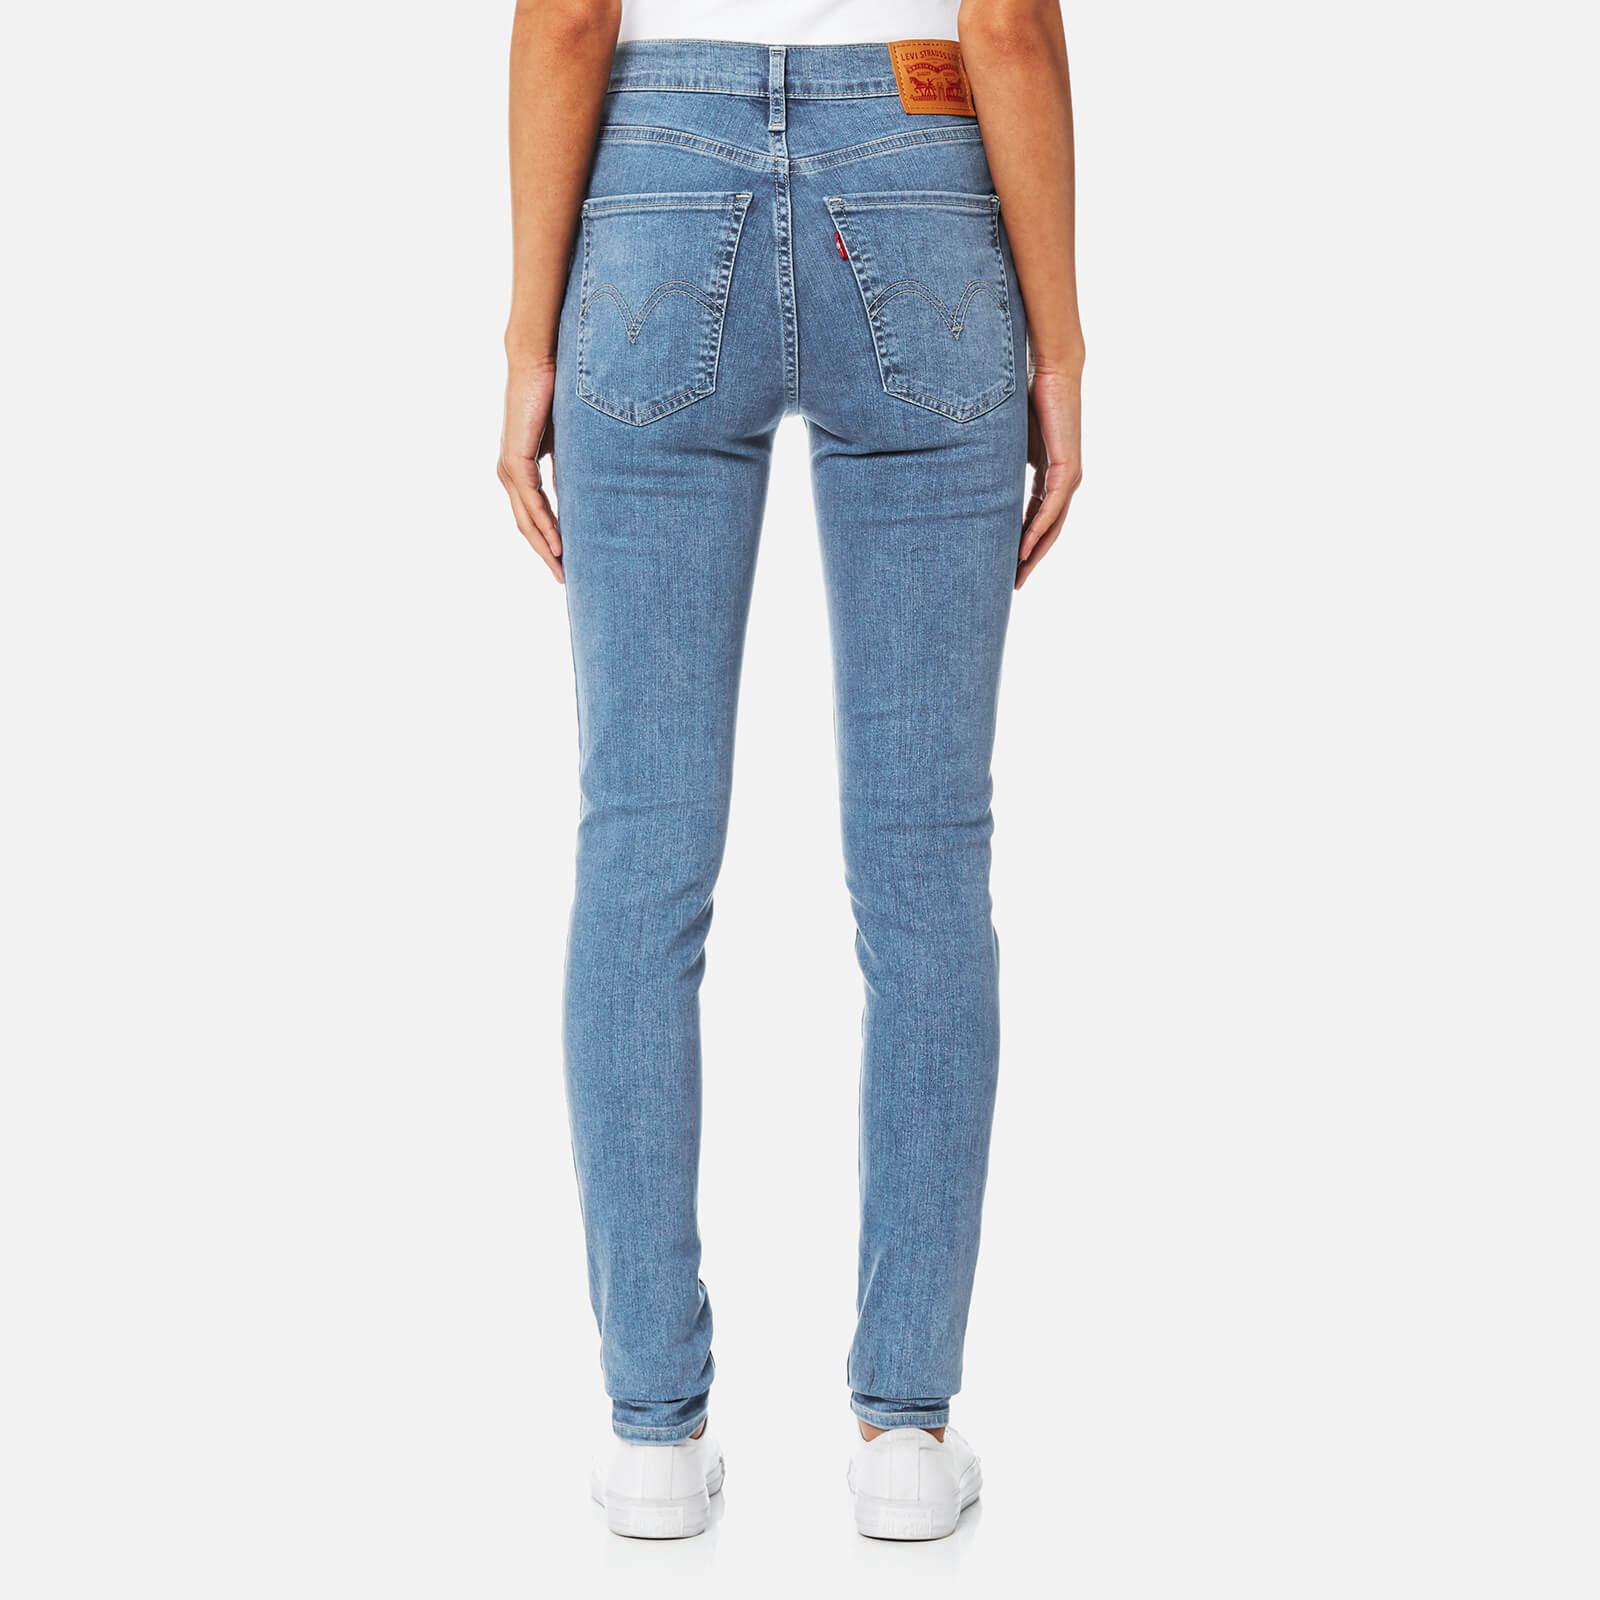 Levi's Denim Mile High Super Skinny Jeans in Blue - Lyst